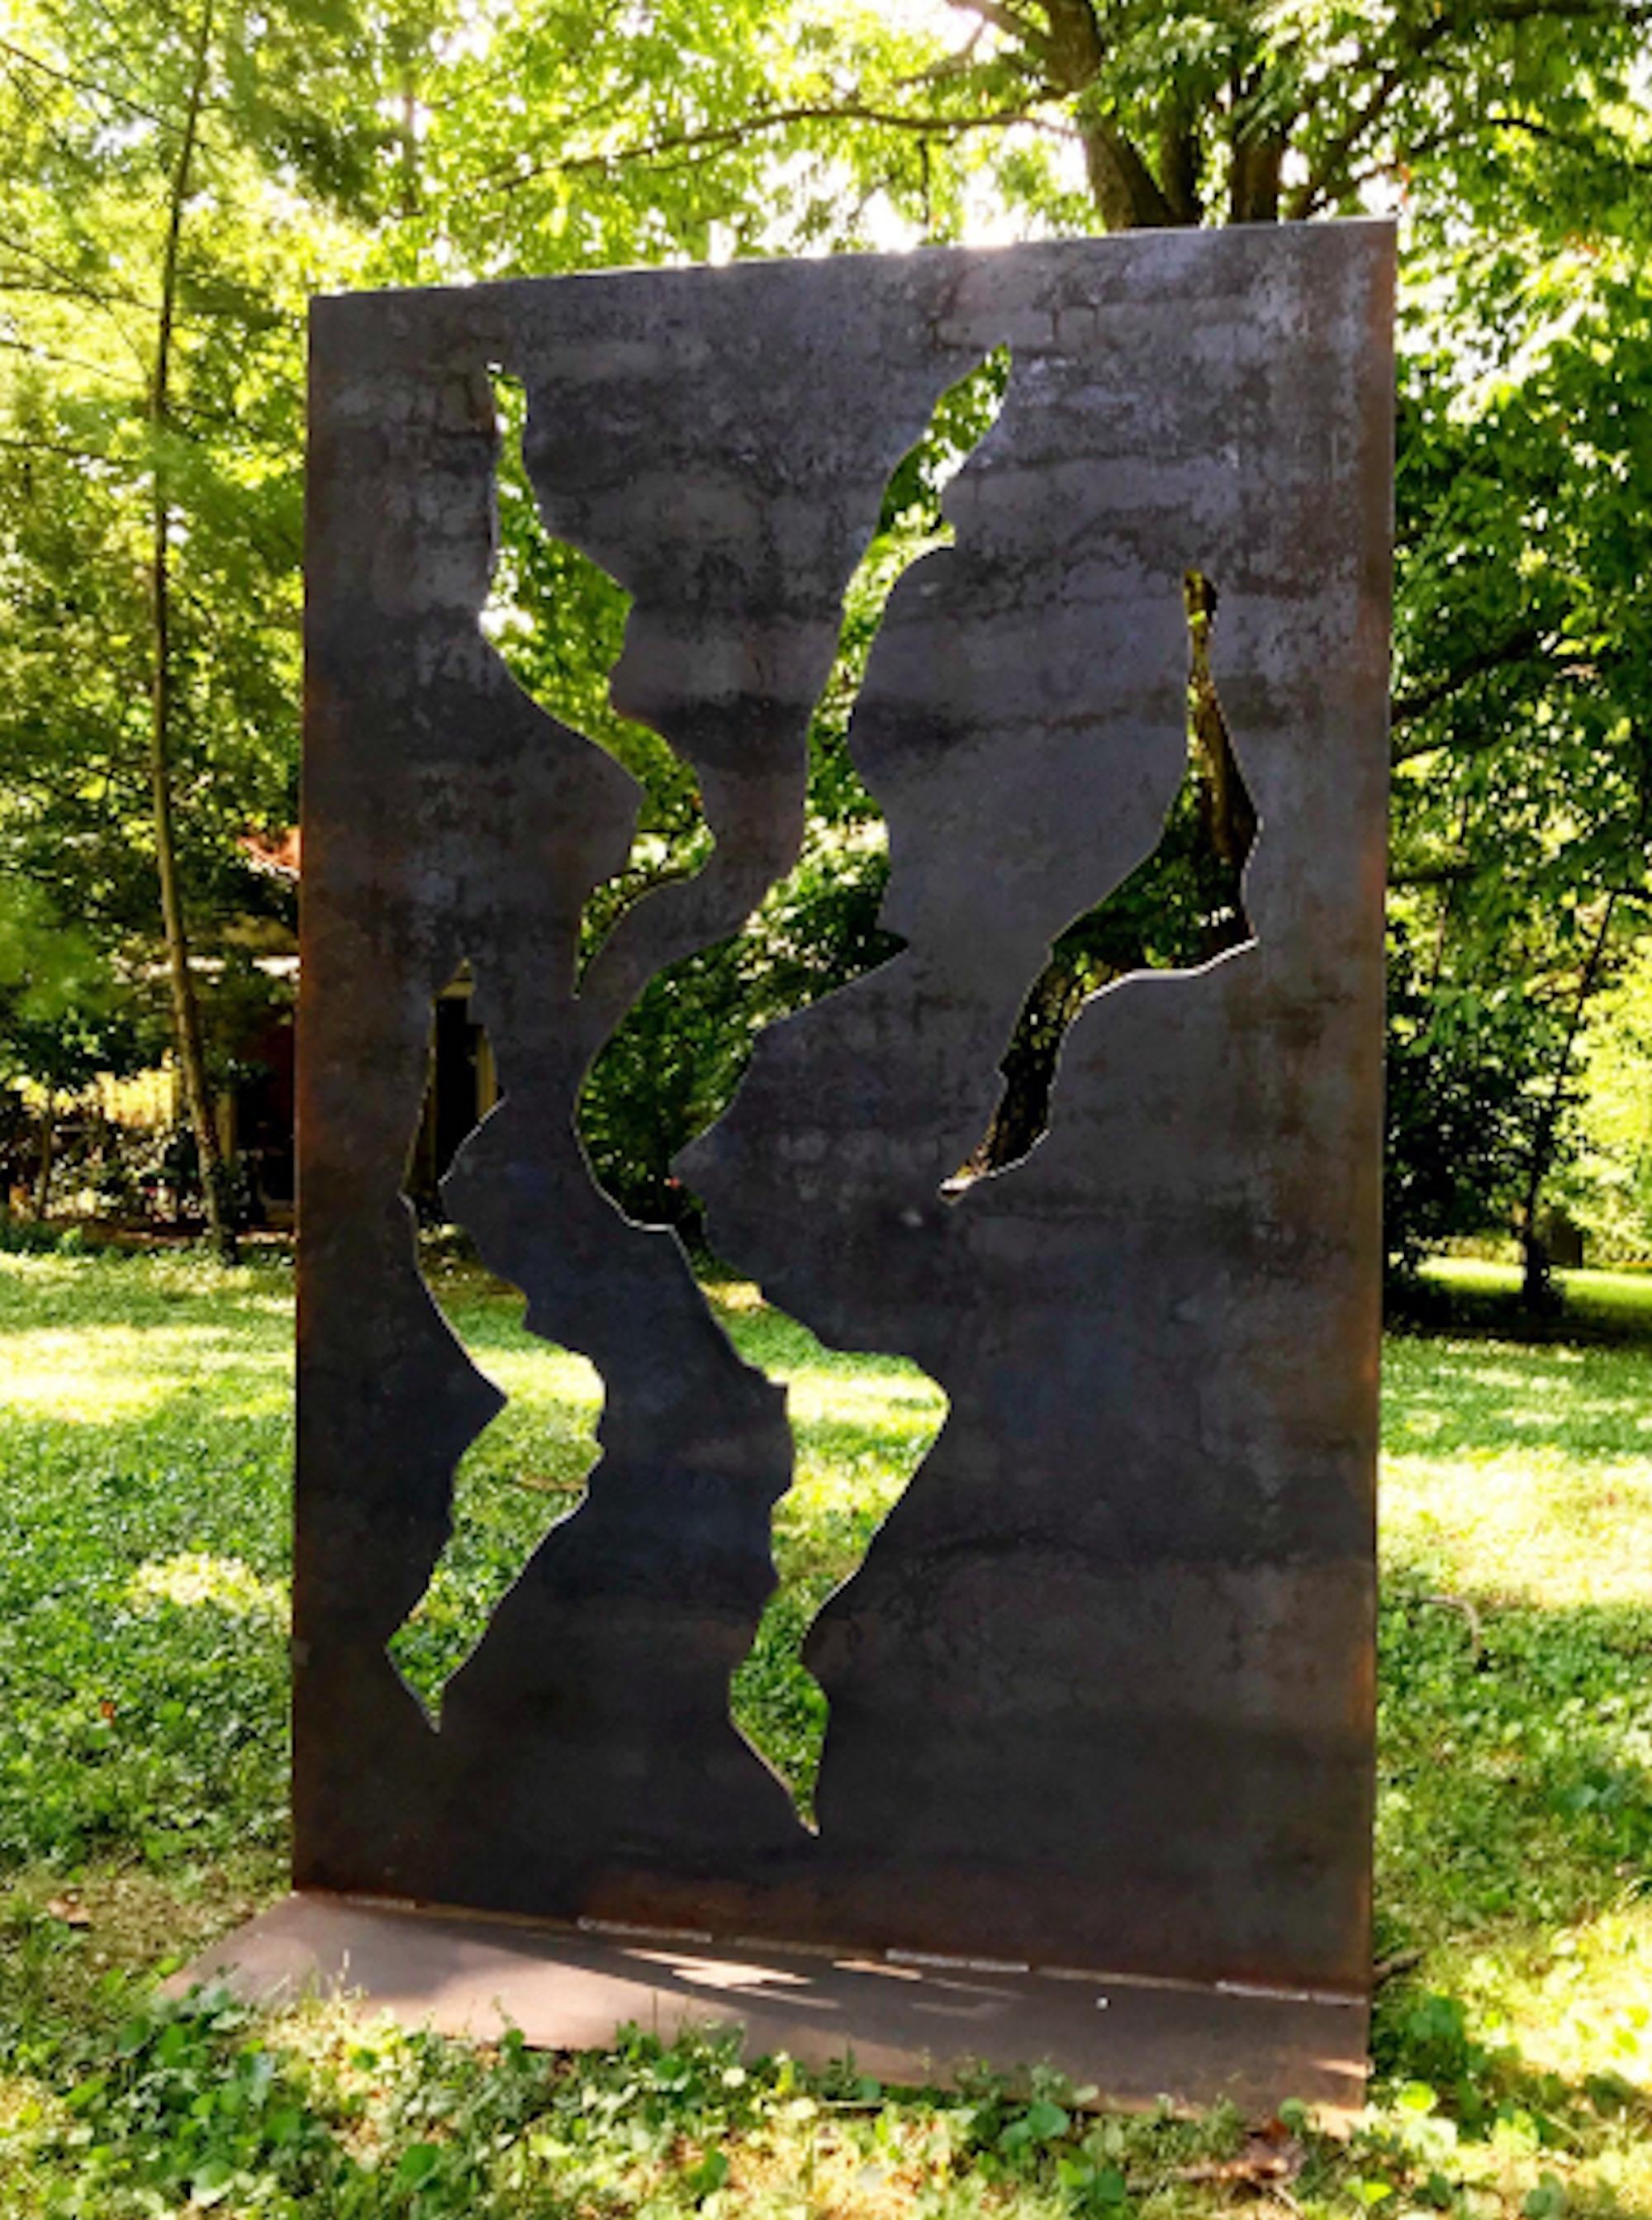 Contemporary Modern Industrial Sculpture Outdoor Rustic Metal Yard Garden Art 1